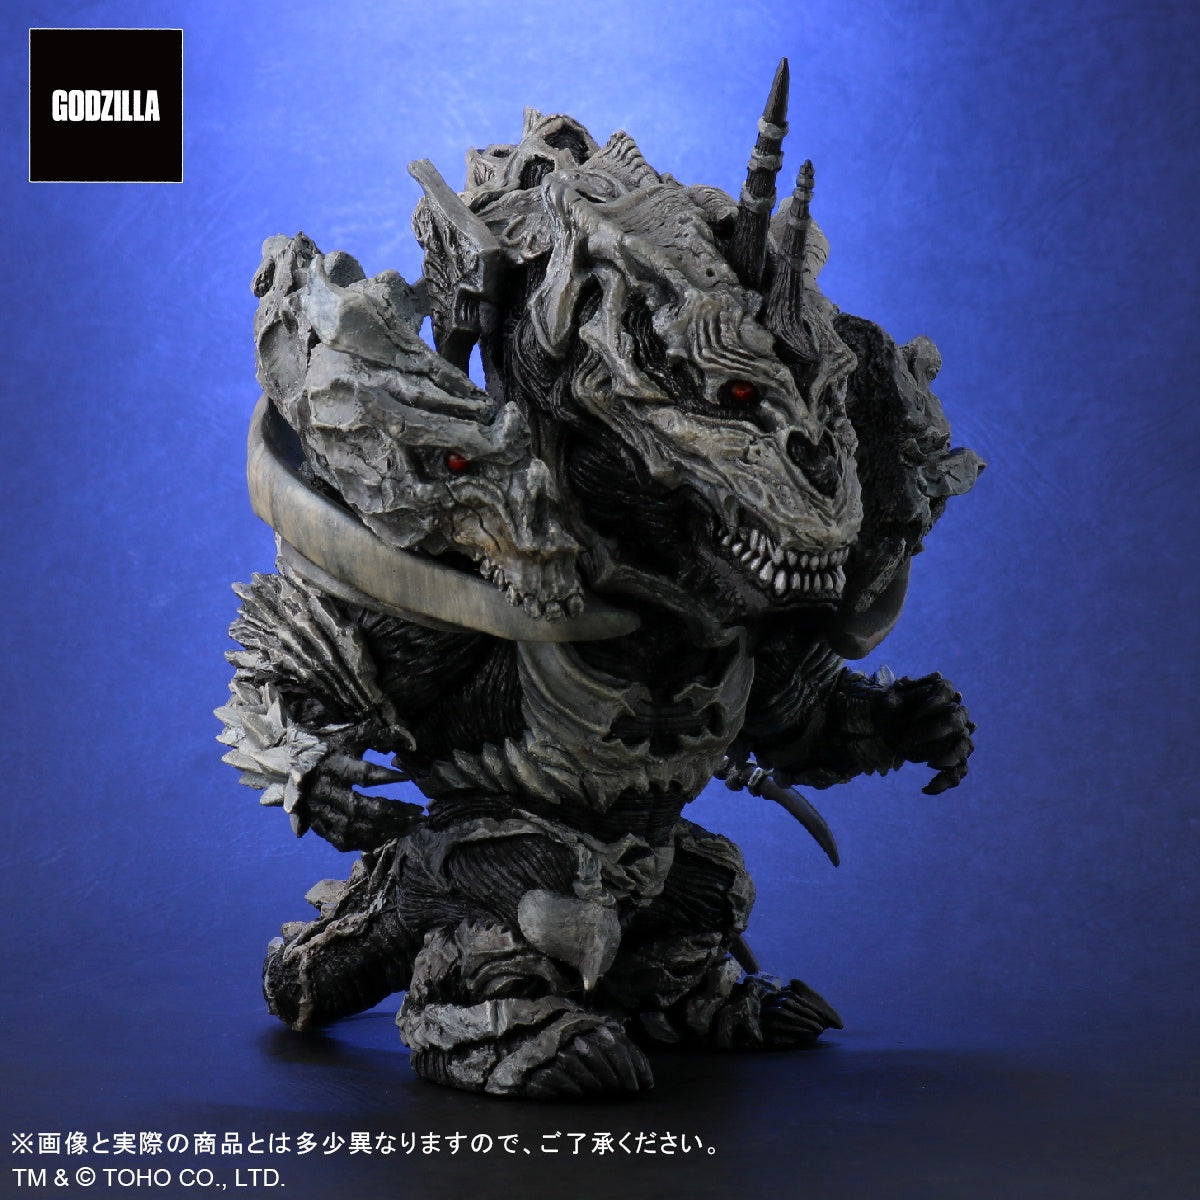 X-Plus - Deforeal - Godzilla: Final Wars (2004) - Monster X - Marvelous Toys